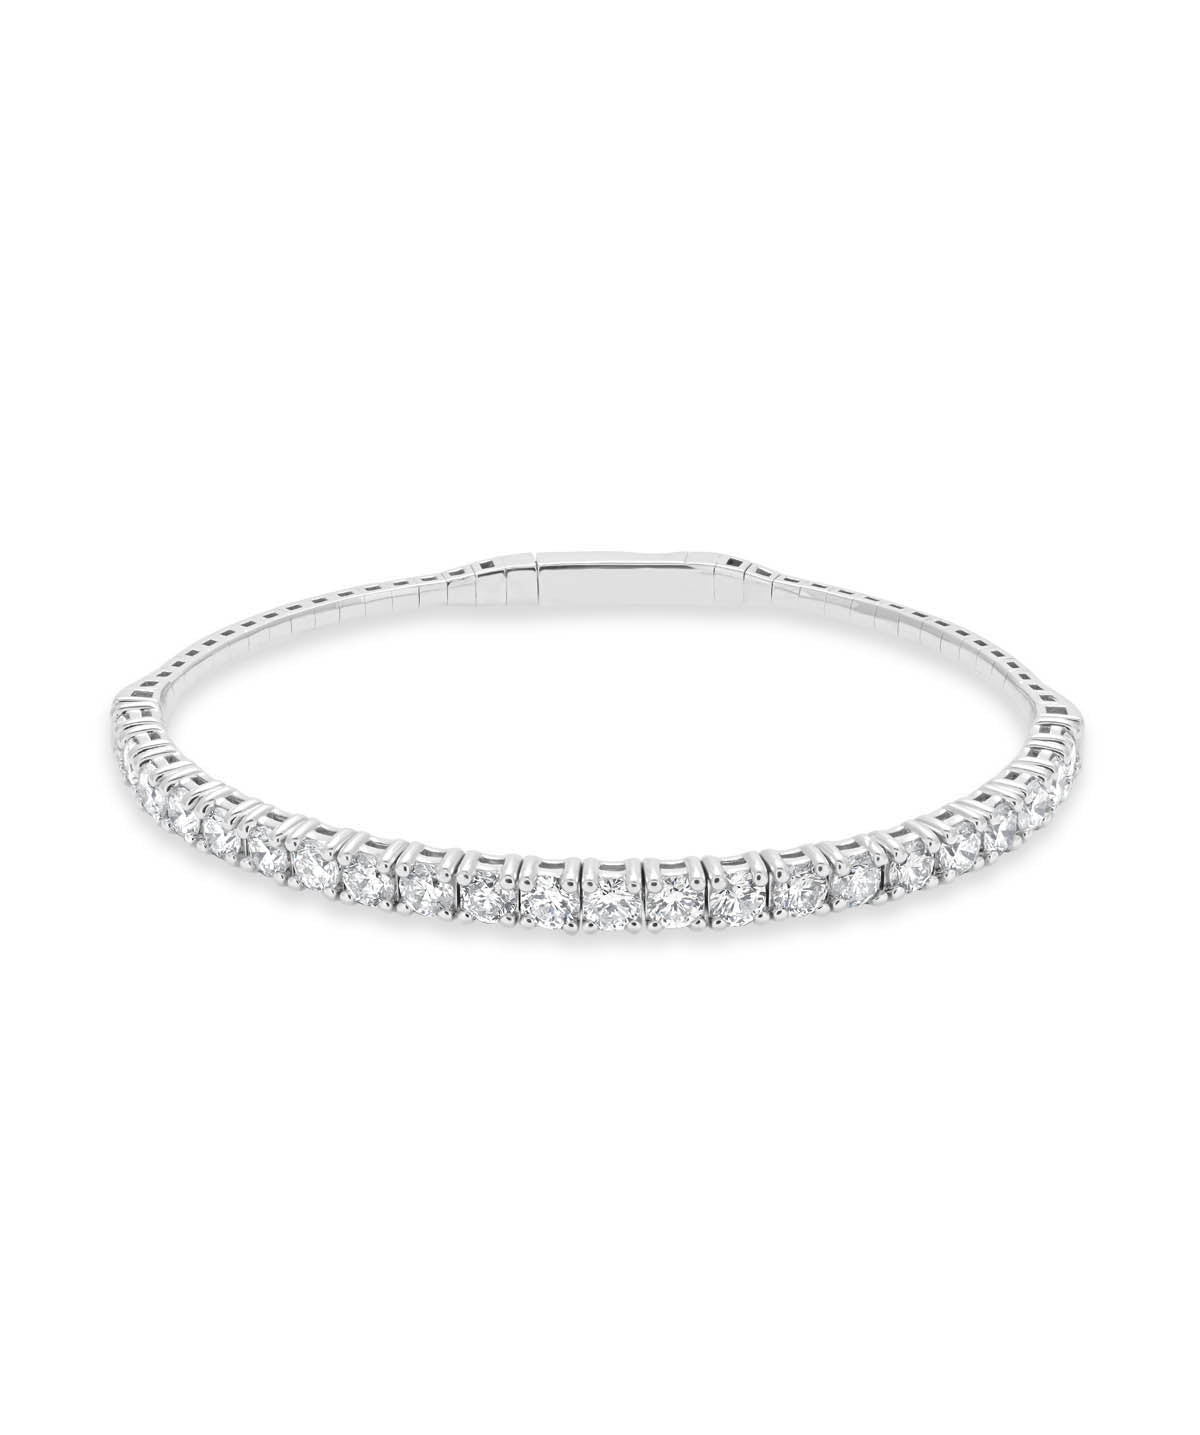 14K White Gold Diamond Flexible Bangle Bracelet 3.56cttw